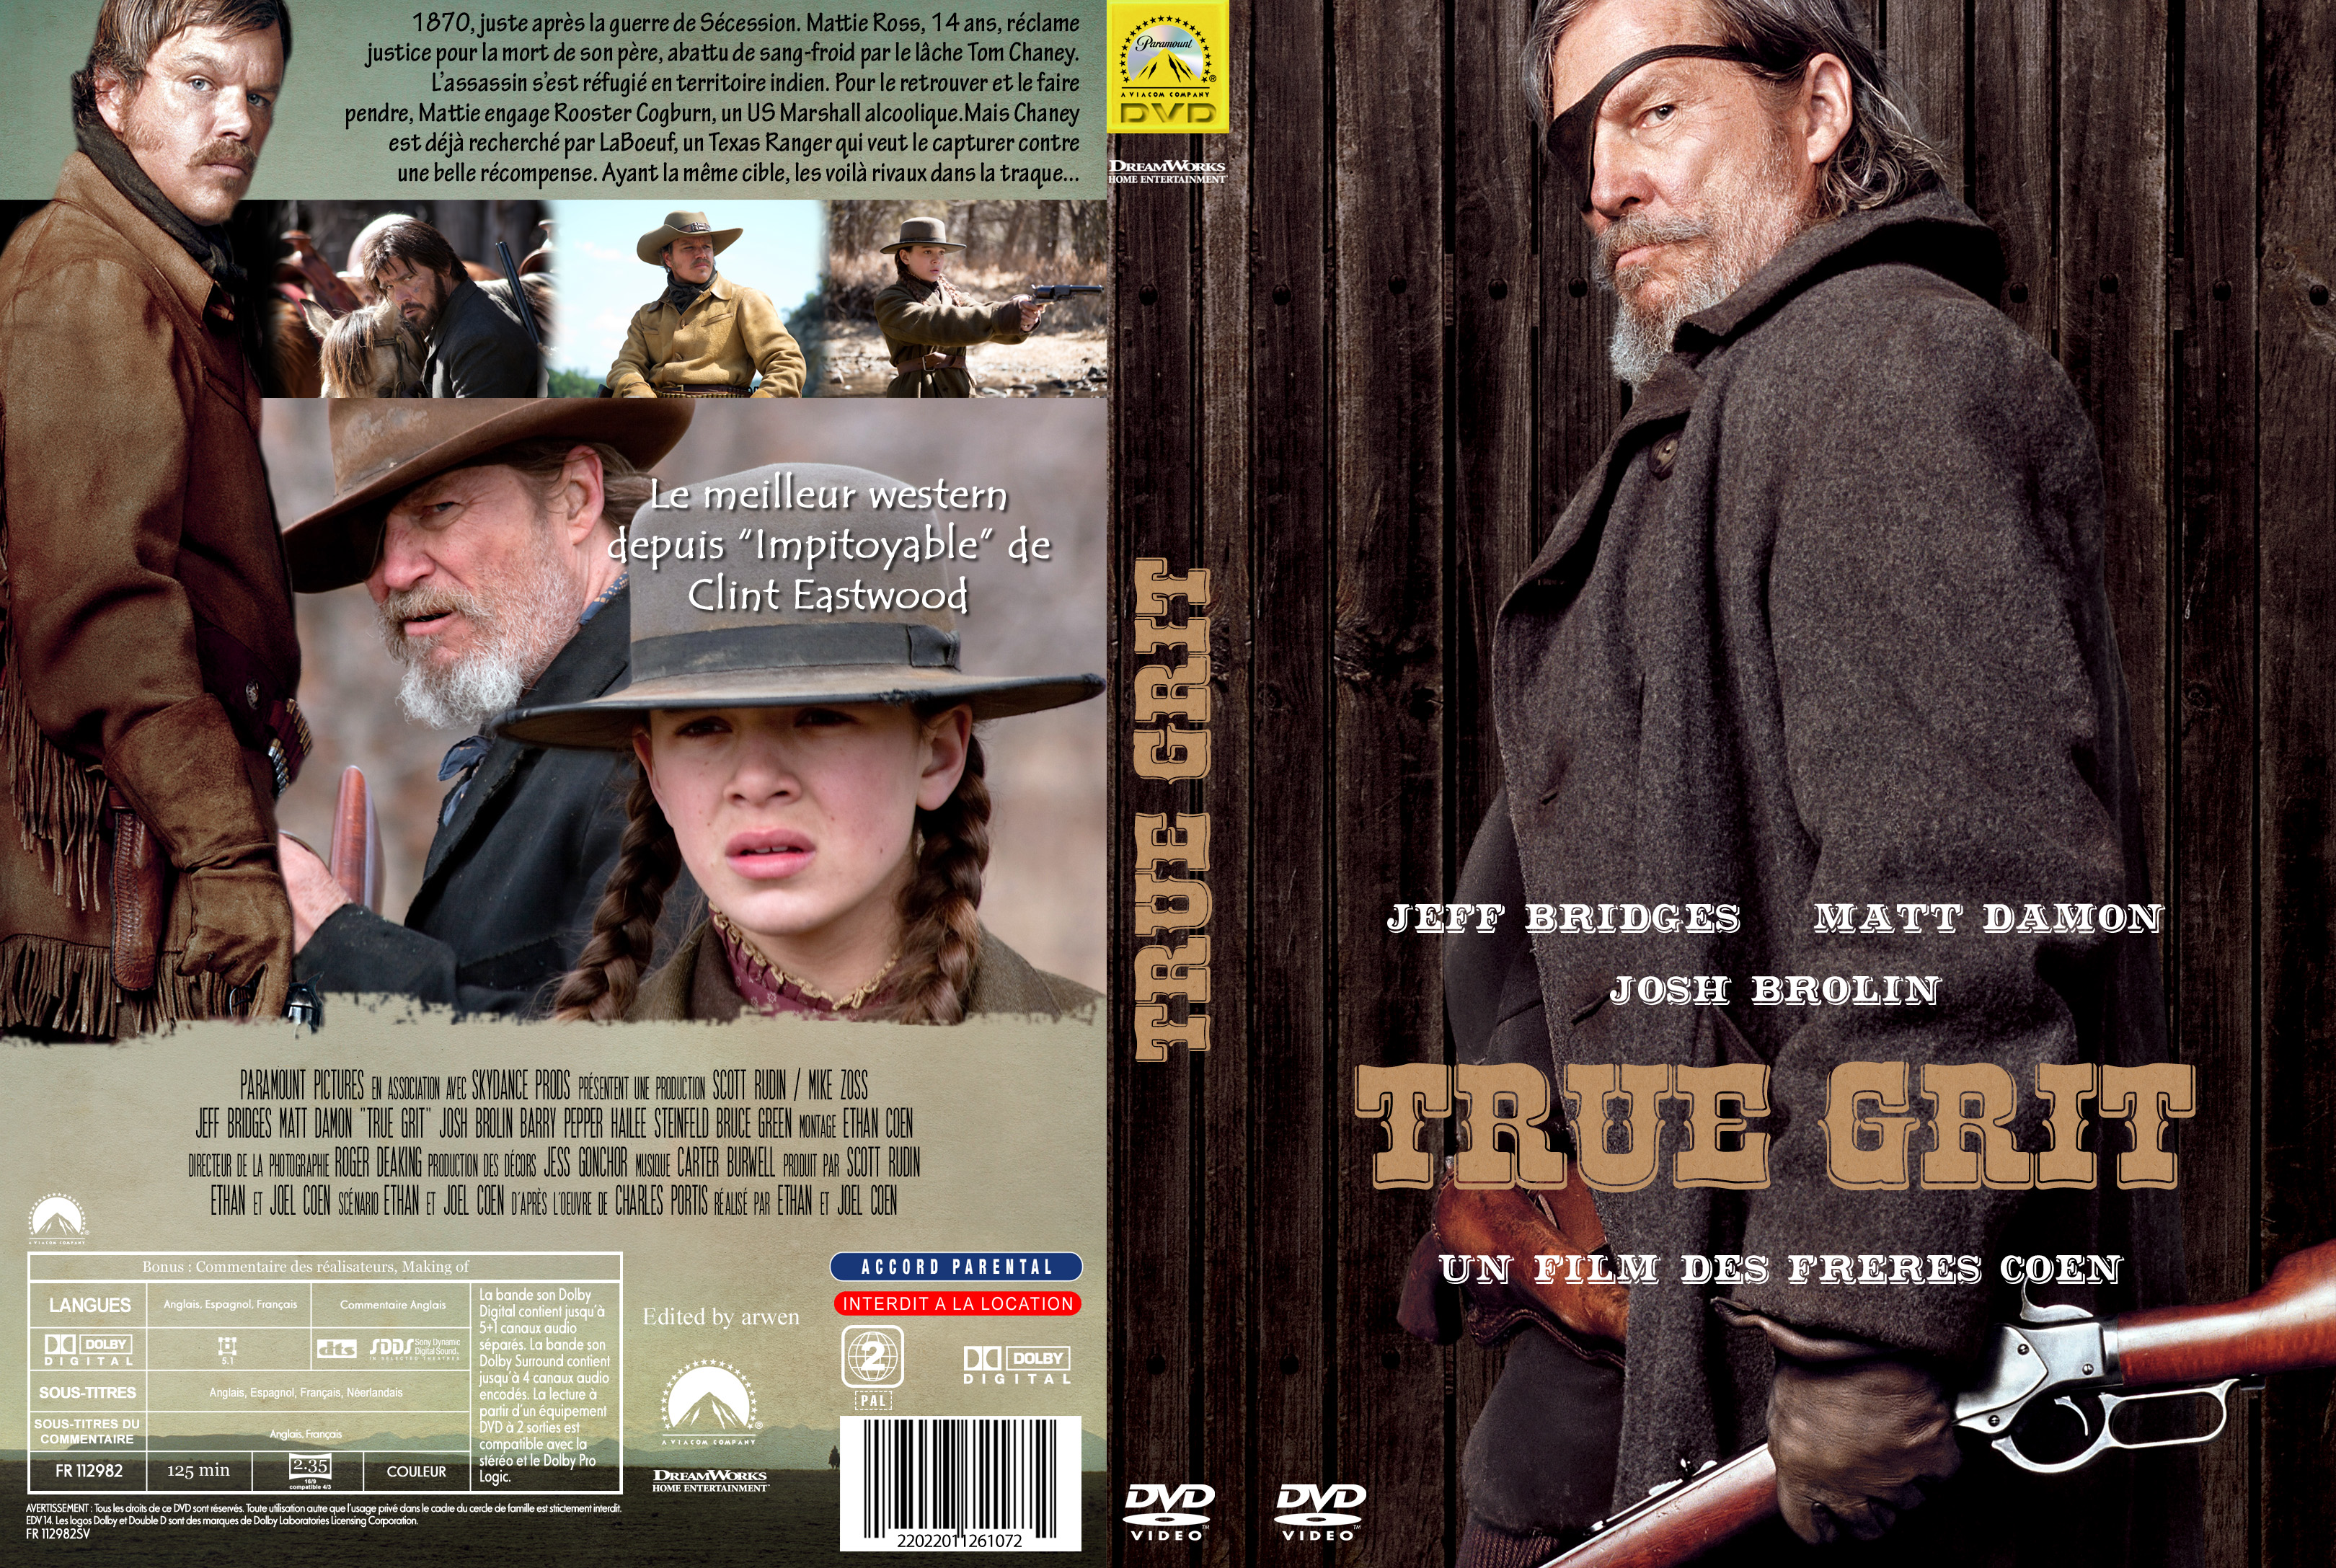 Jaquette DVD True grit (2011) custom